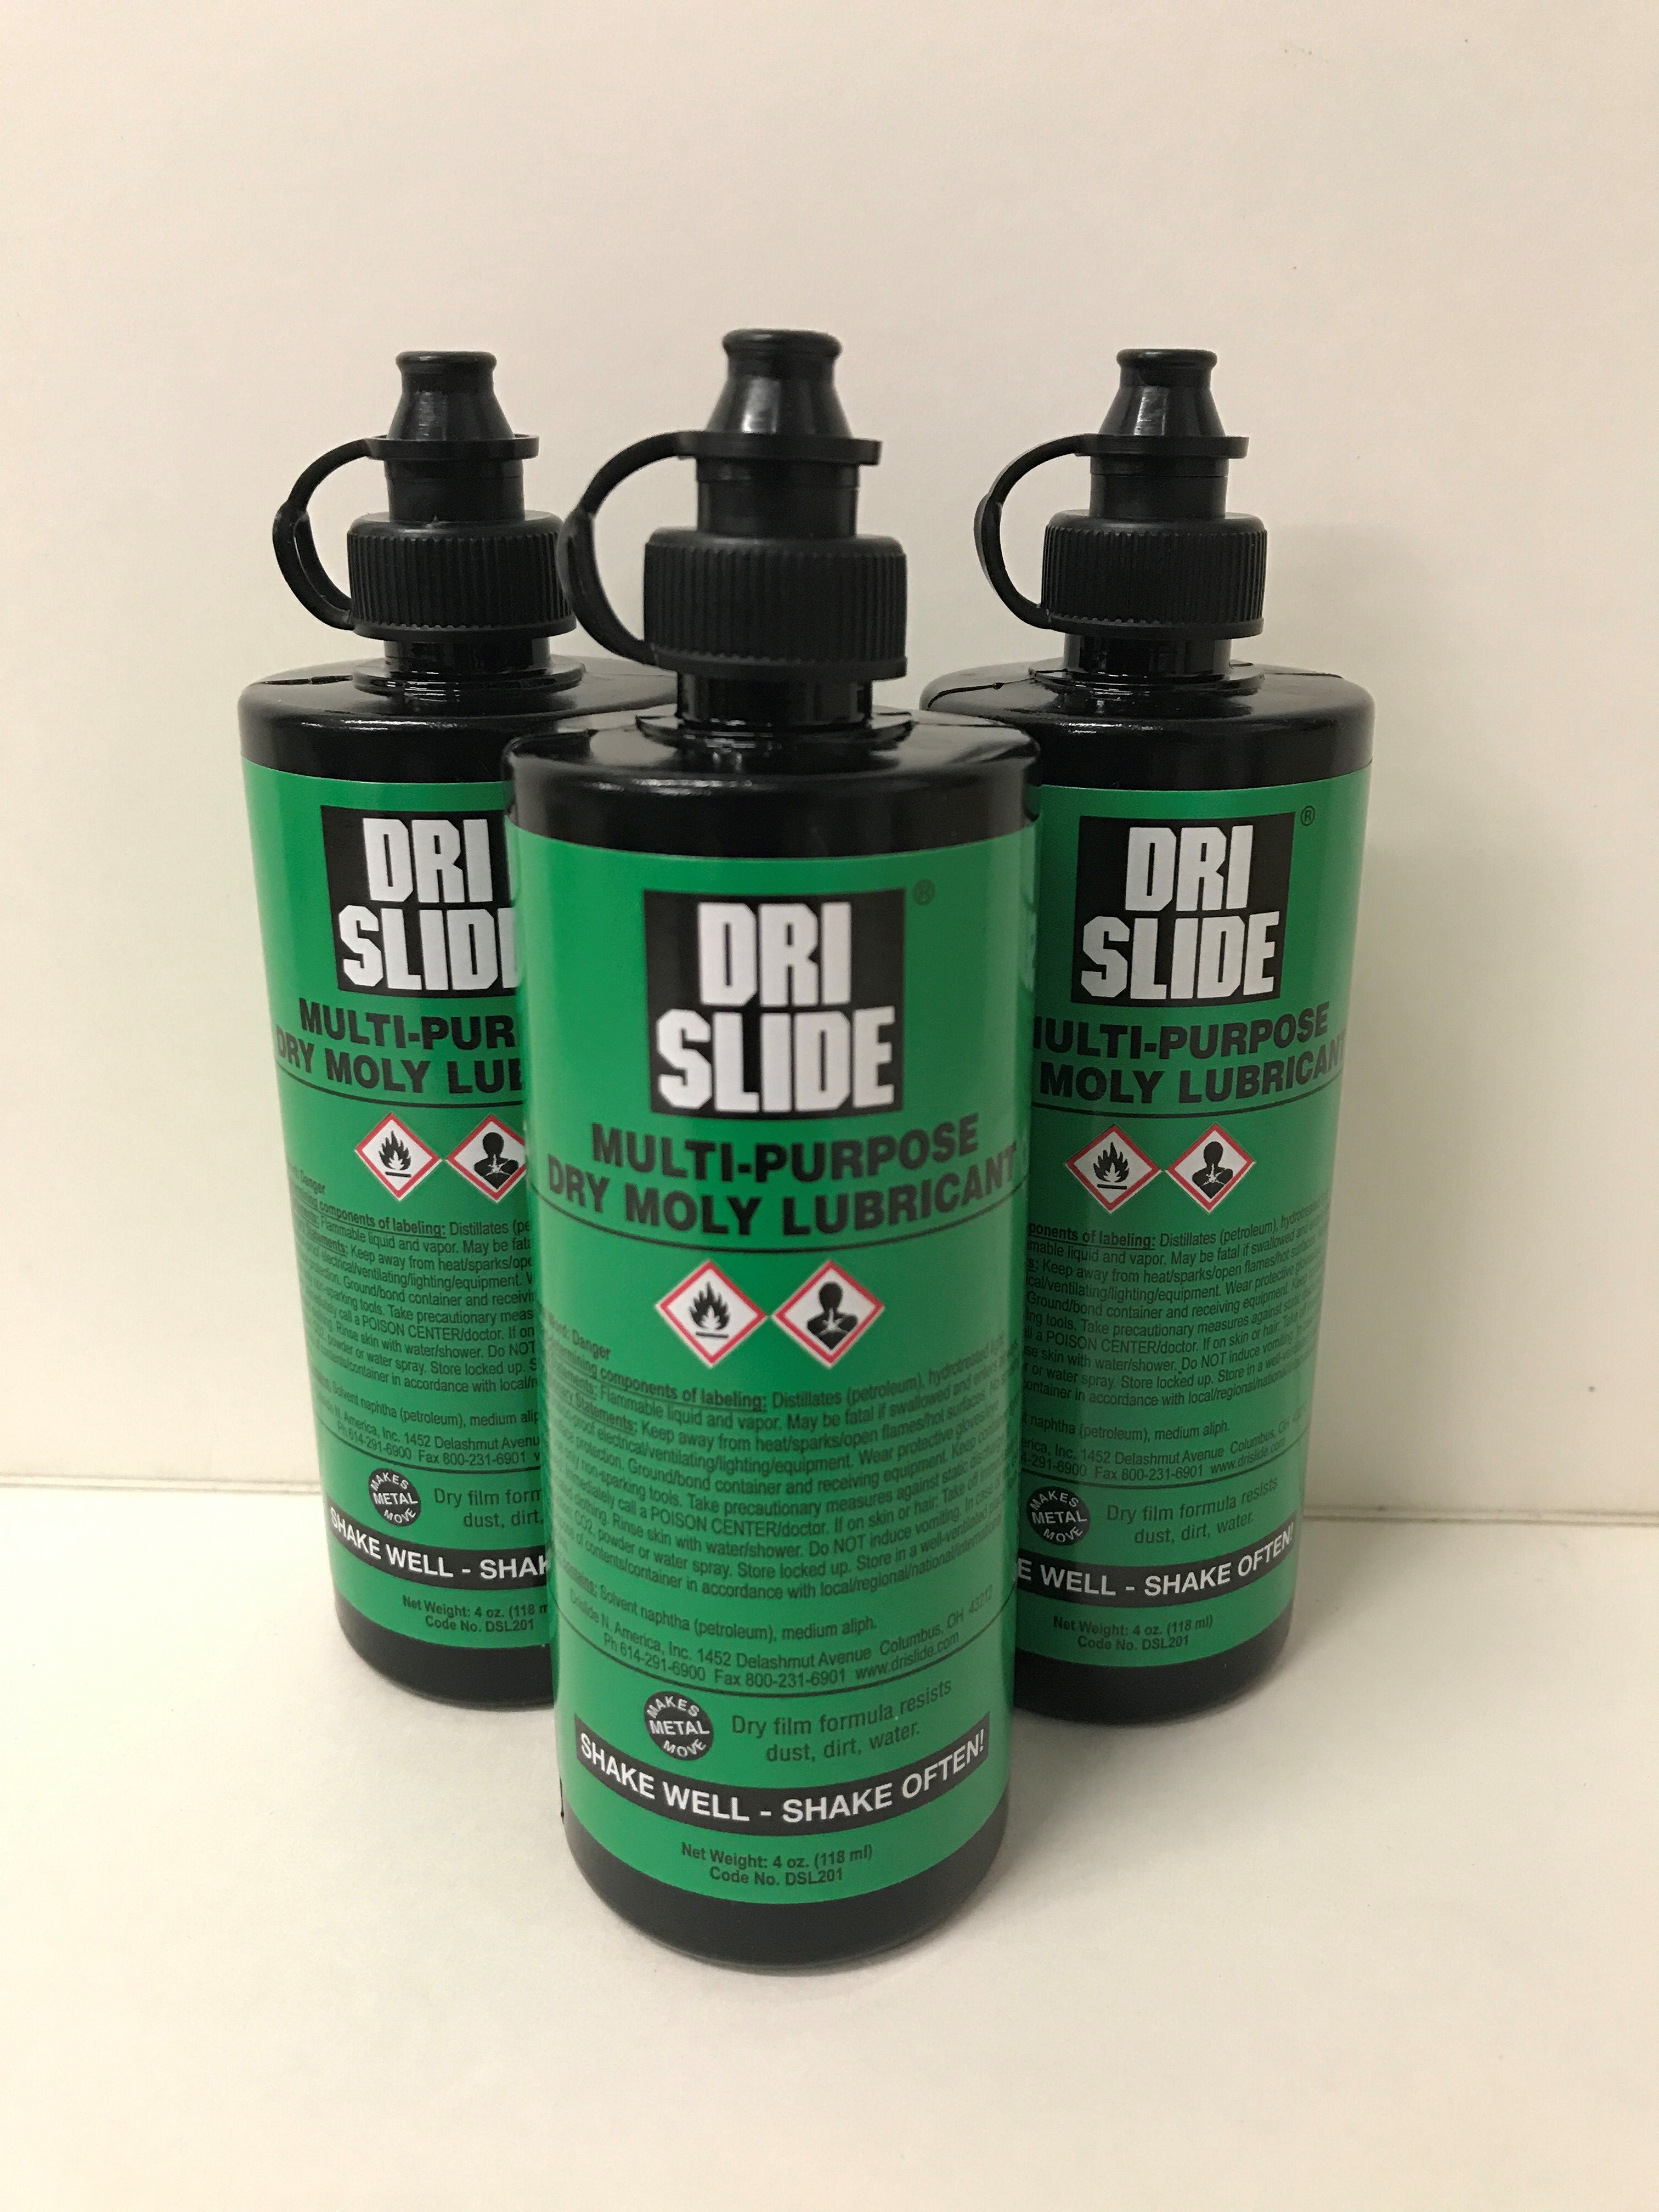 Drislide N. America, Inc. — Drislide Multi-Purpose, 4oz Bottle-3 pack.